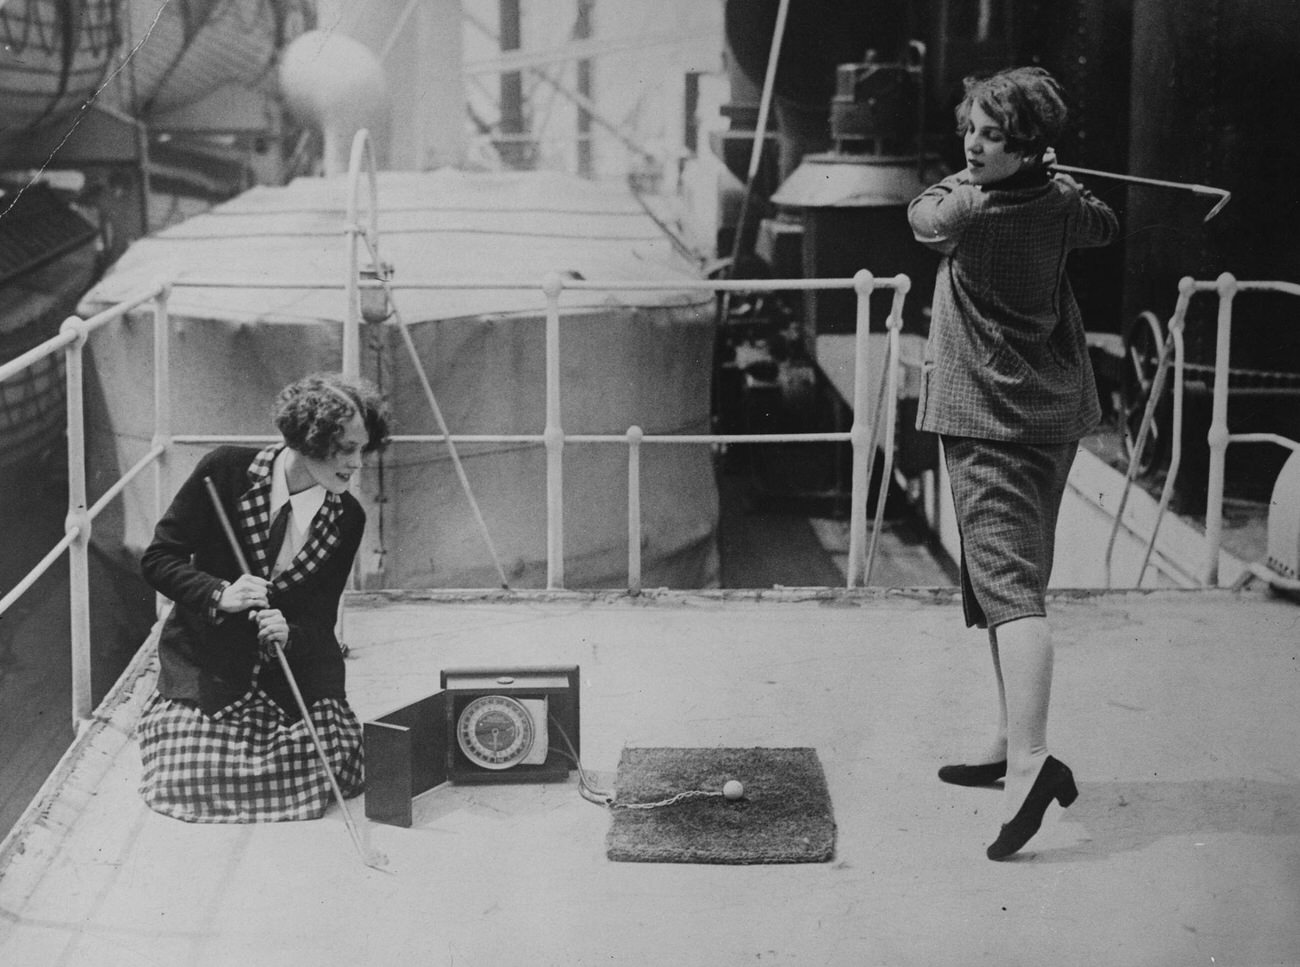 Women practicing golf on S.S. California ship deck.